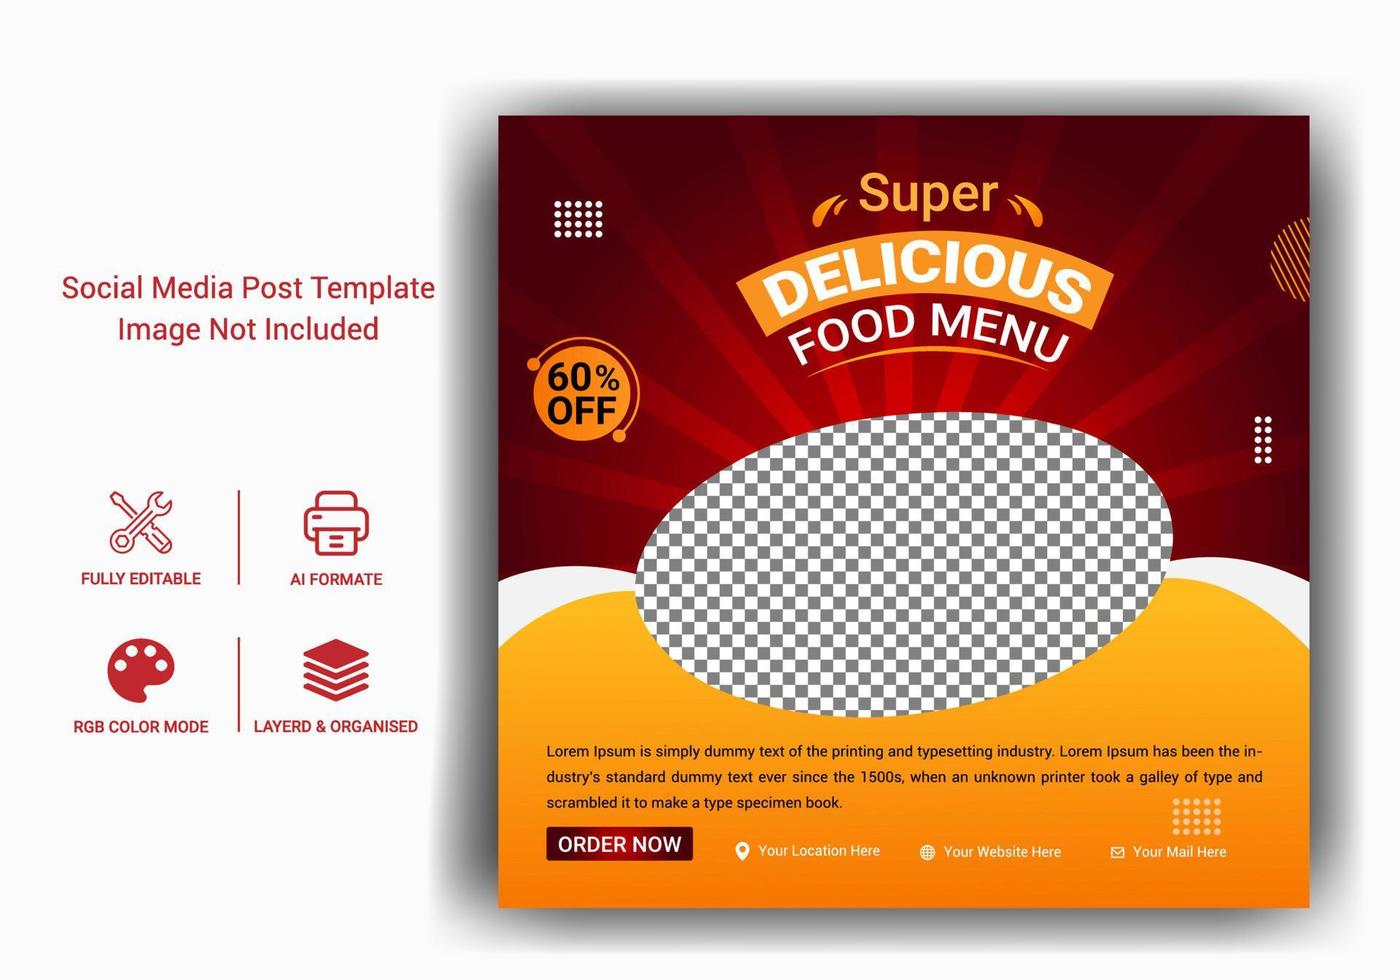 Food Menu And Restaurant Social media Web Banner Template vector